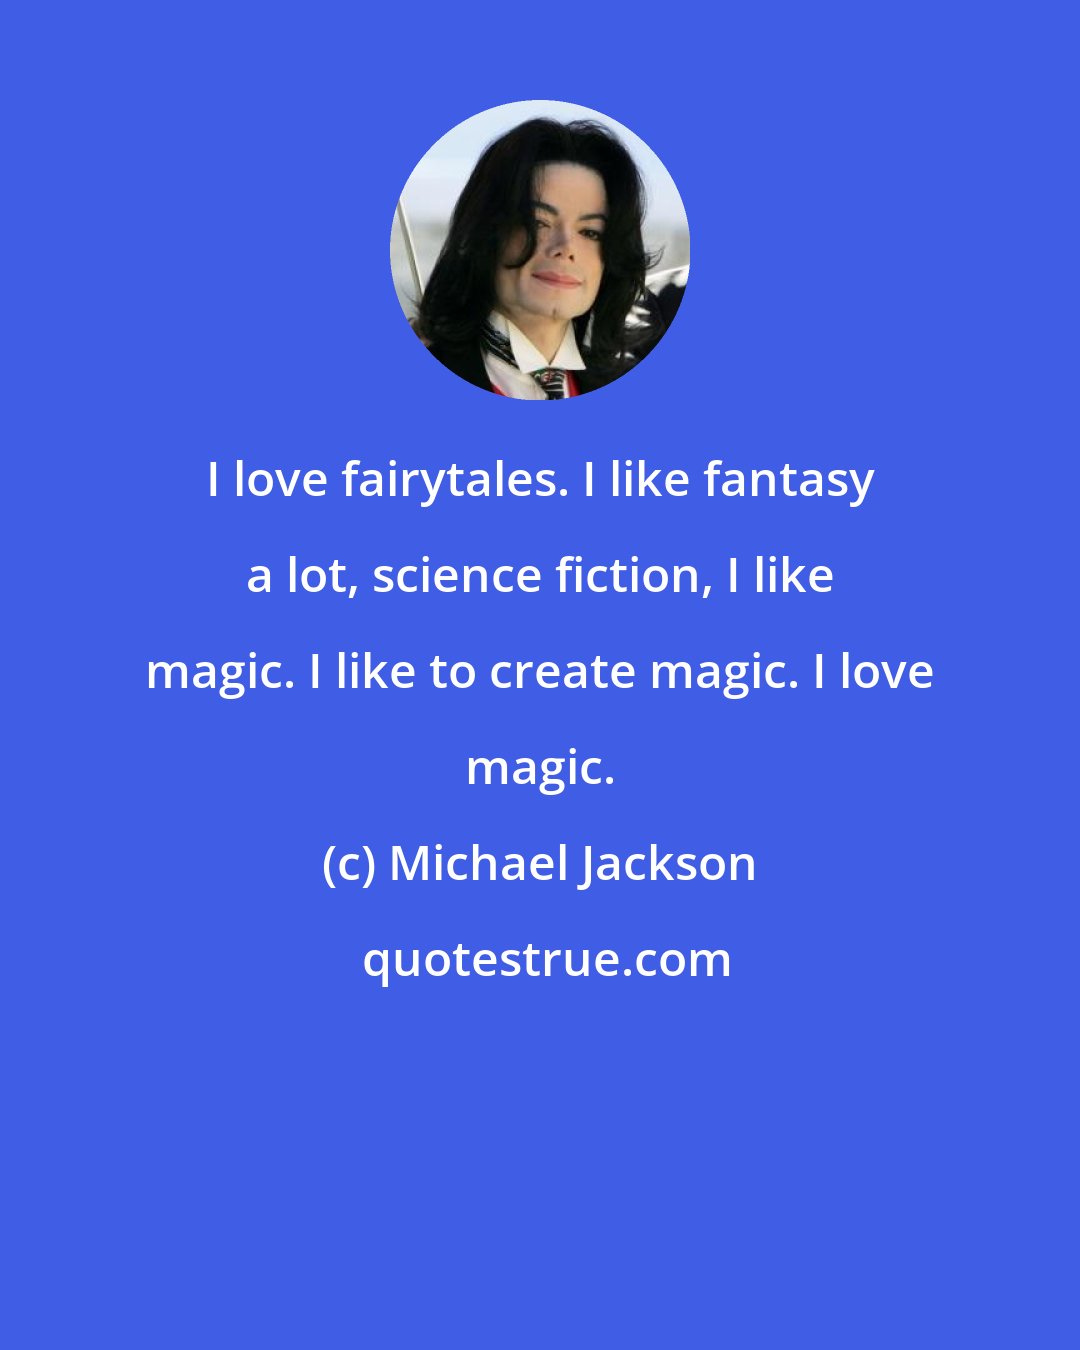 Michael Jackson: I love fairytales. I like fantasy a lot, science fiction, I like magic. I like to create magic. I love magic.